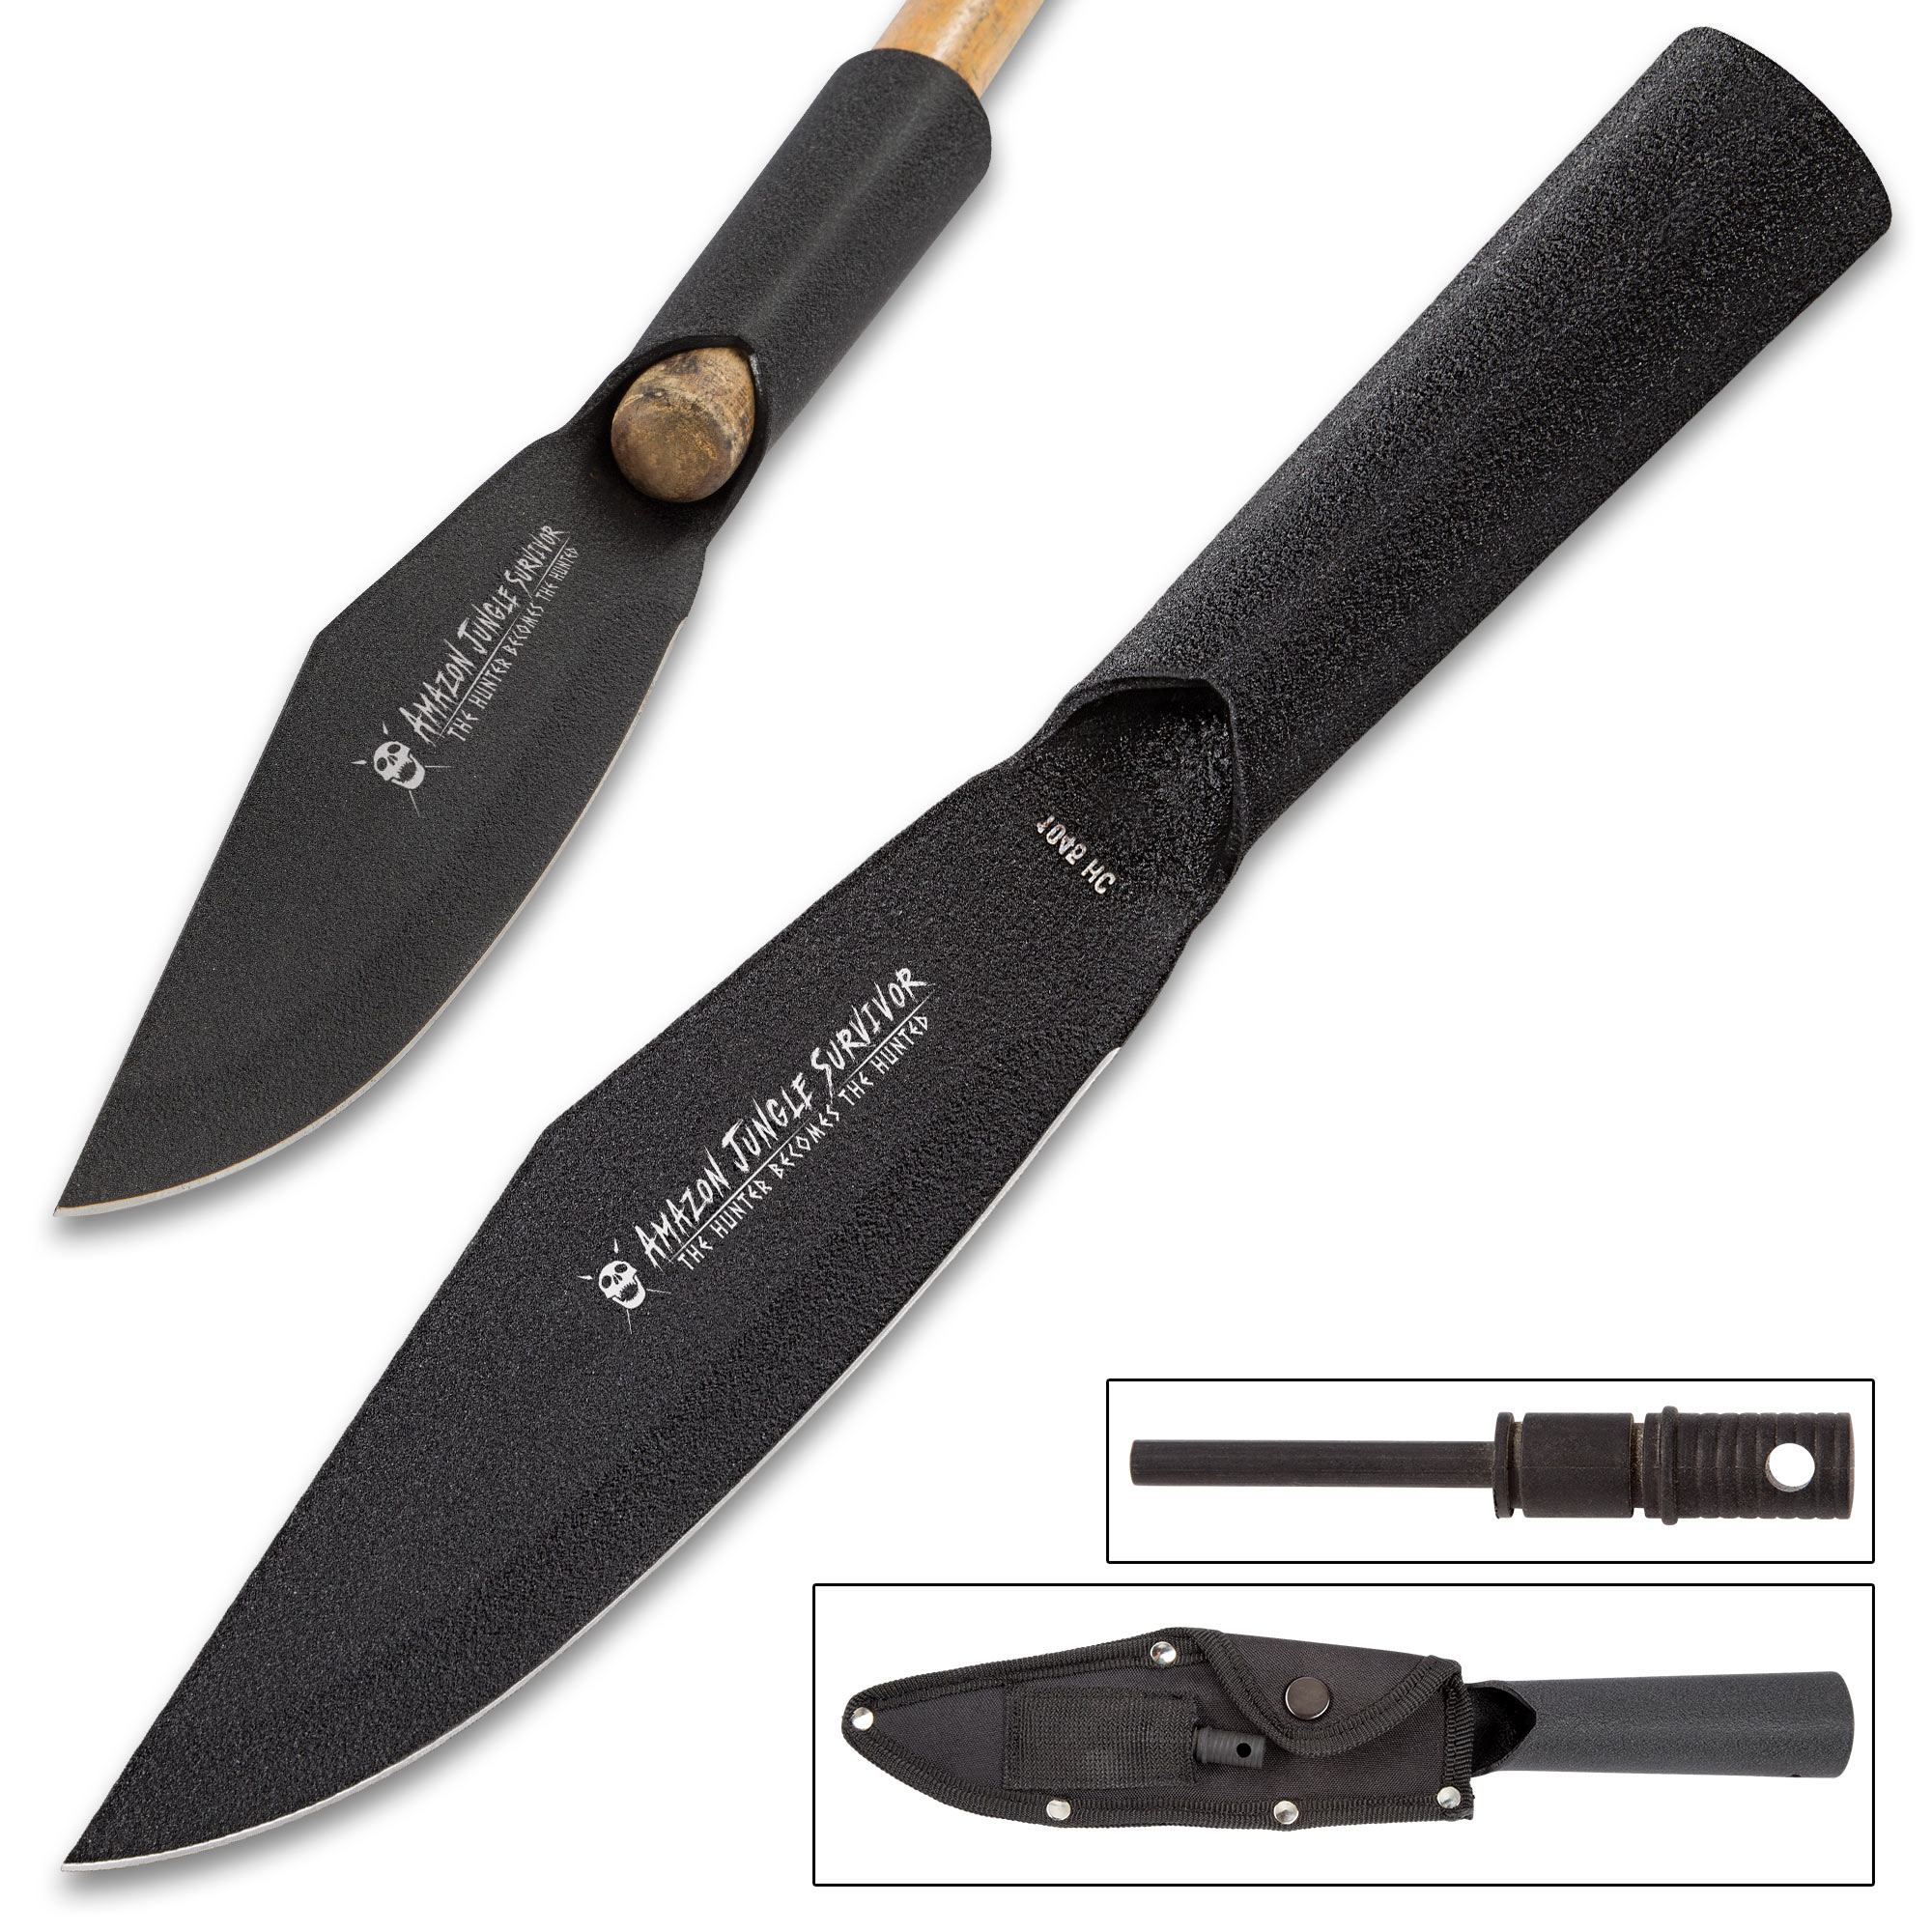 Купить нож насадку. Нож копье SOG. Нож Spear Jackson Survival Foldable Knife. Нож Spear head Blades d2 EVO. Ножи Spearhead Blades.